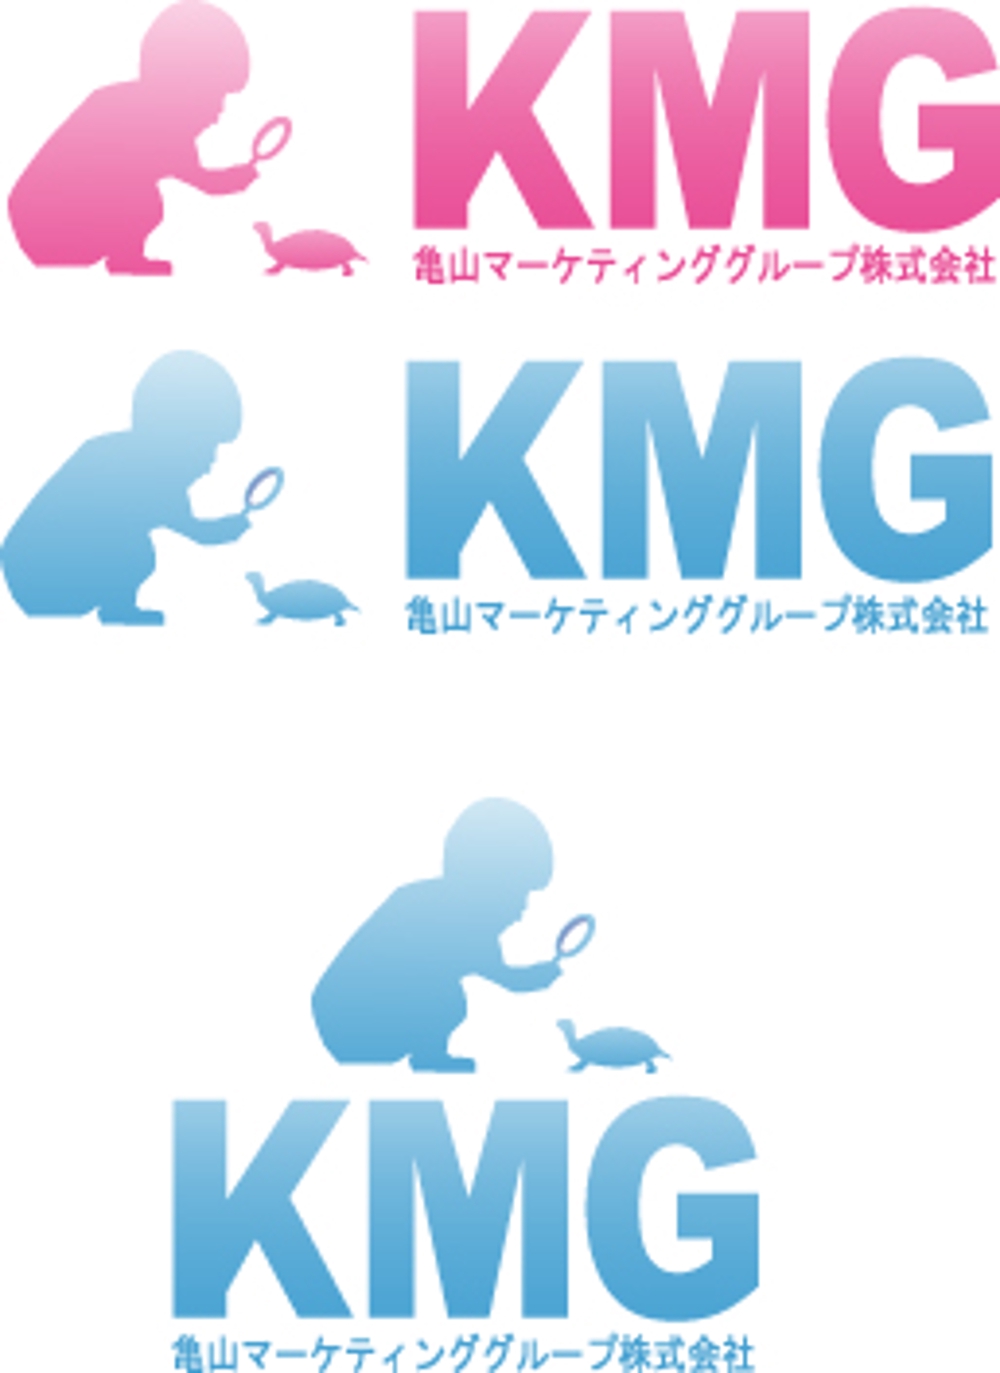 KMG様_ロゴご提案.jpg